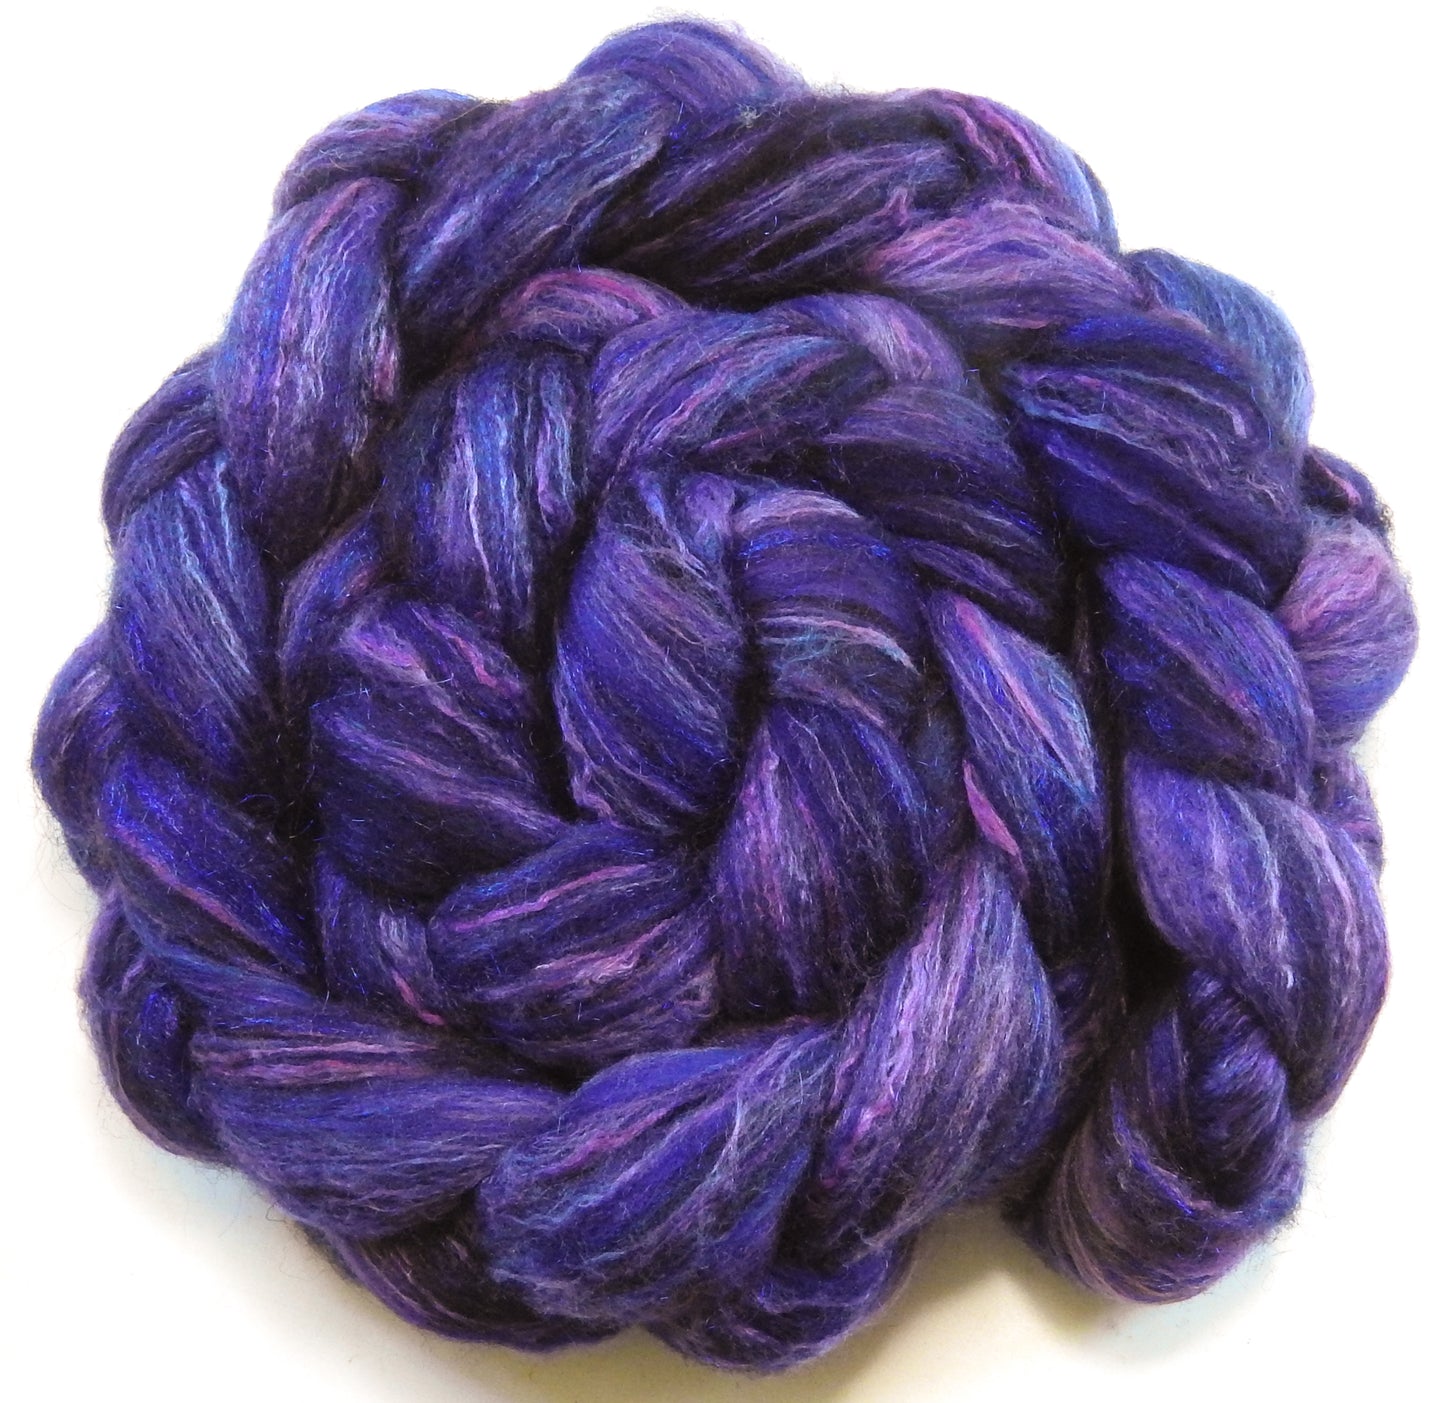 Damson Plum- Batt in a Braid #7 - Polwarth/ Manx / Mulberry silk/ Firestar (30/30/30/10)